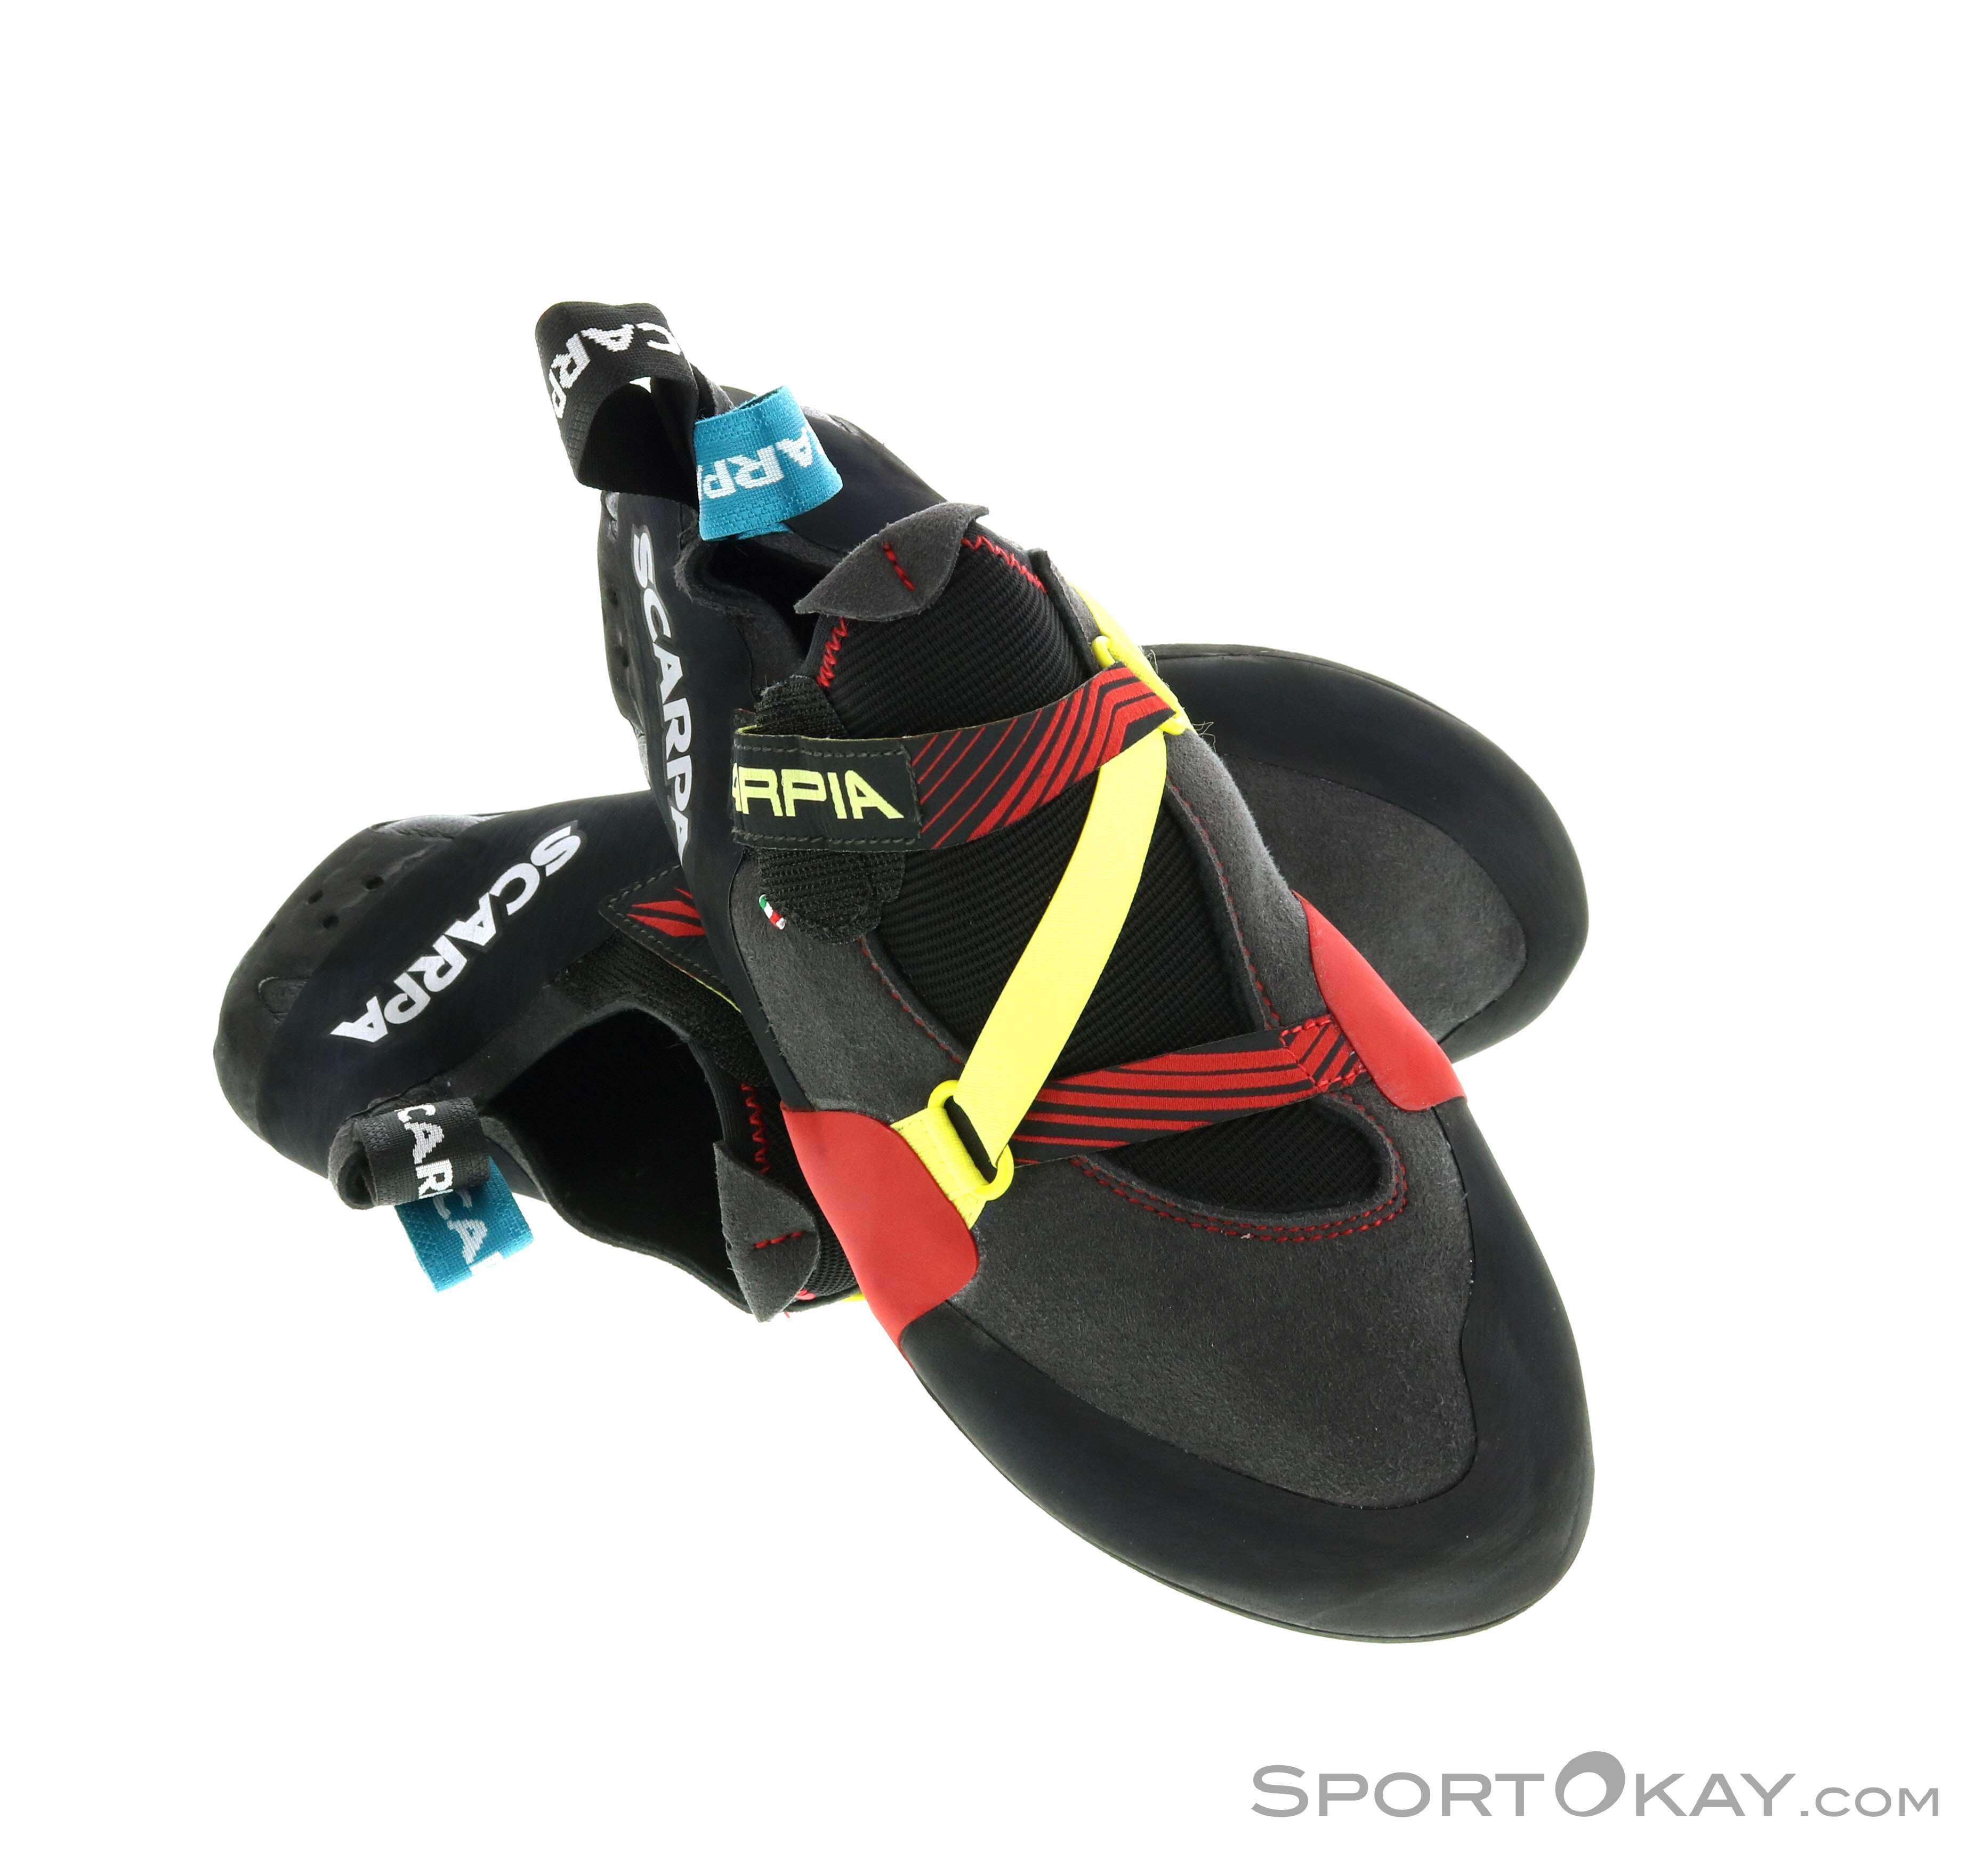 SCARPA Men's Arpia Rock Climbing Shoes for Sport Climbing and Bouldering 